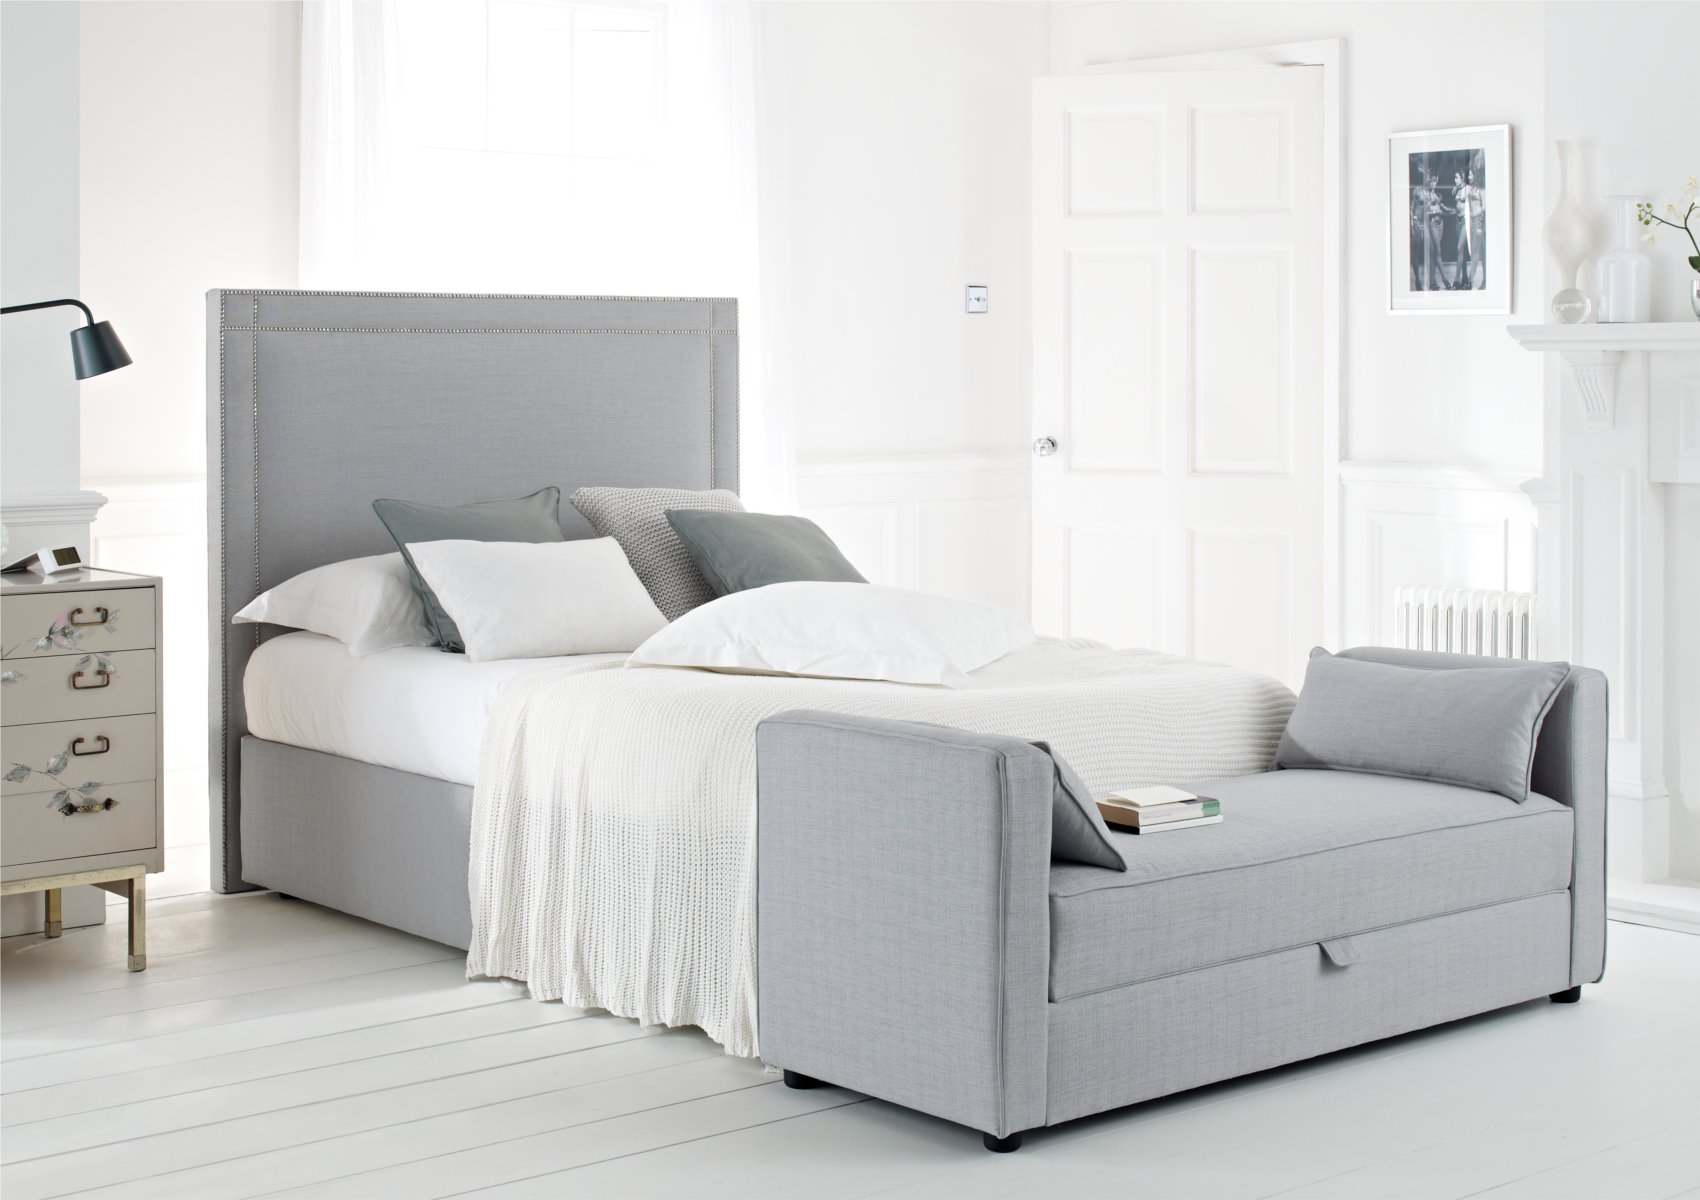 View Buckingham Harbour Grey Upholstered Double Divan Bed Time4Sleep information